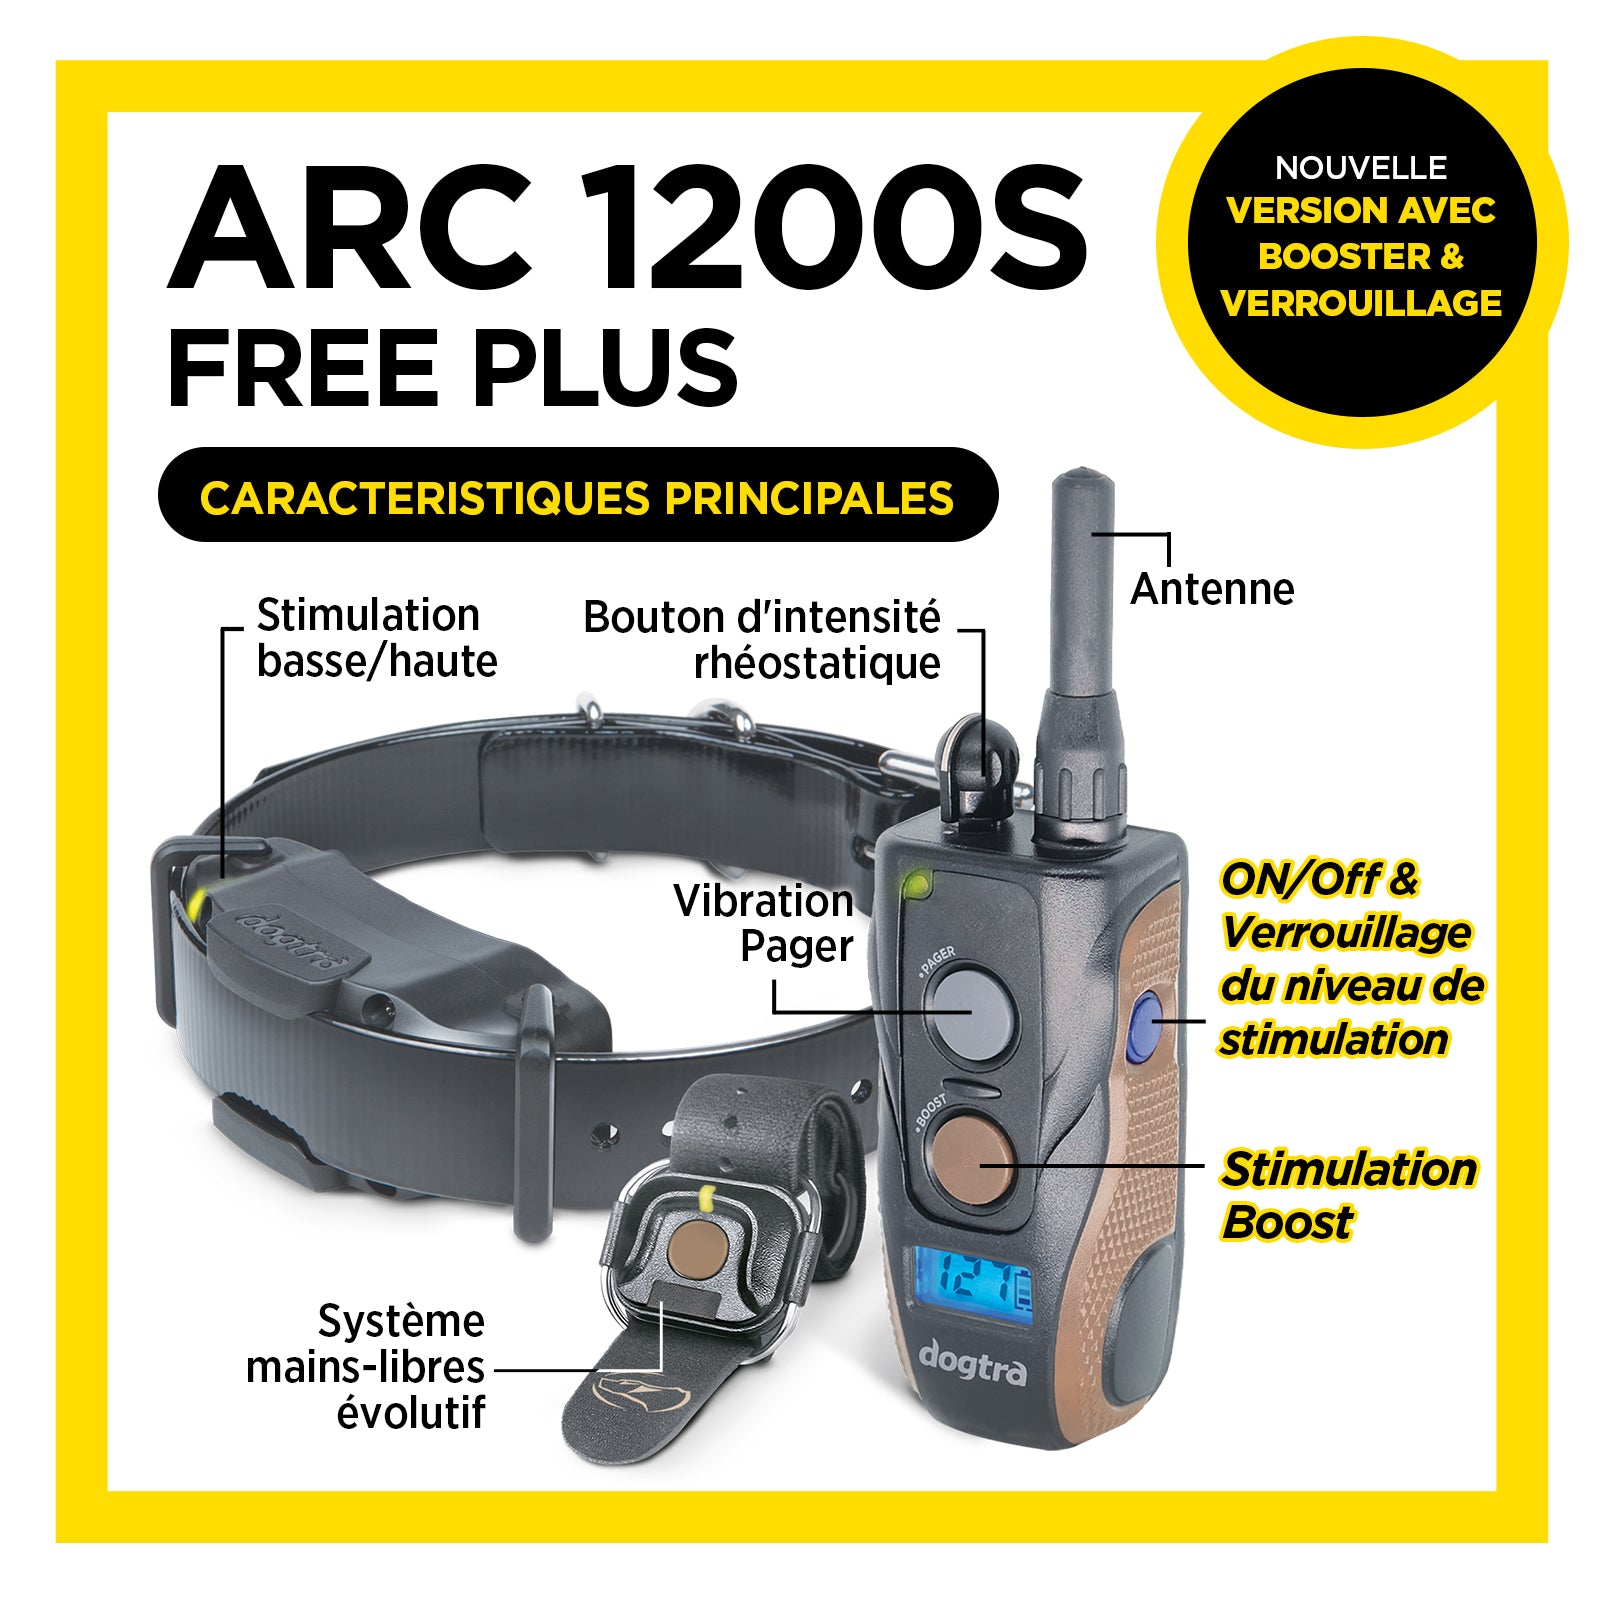 ARC 1200S FREE PLUS